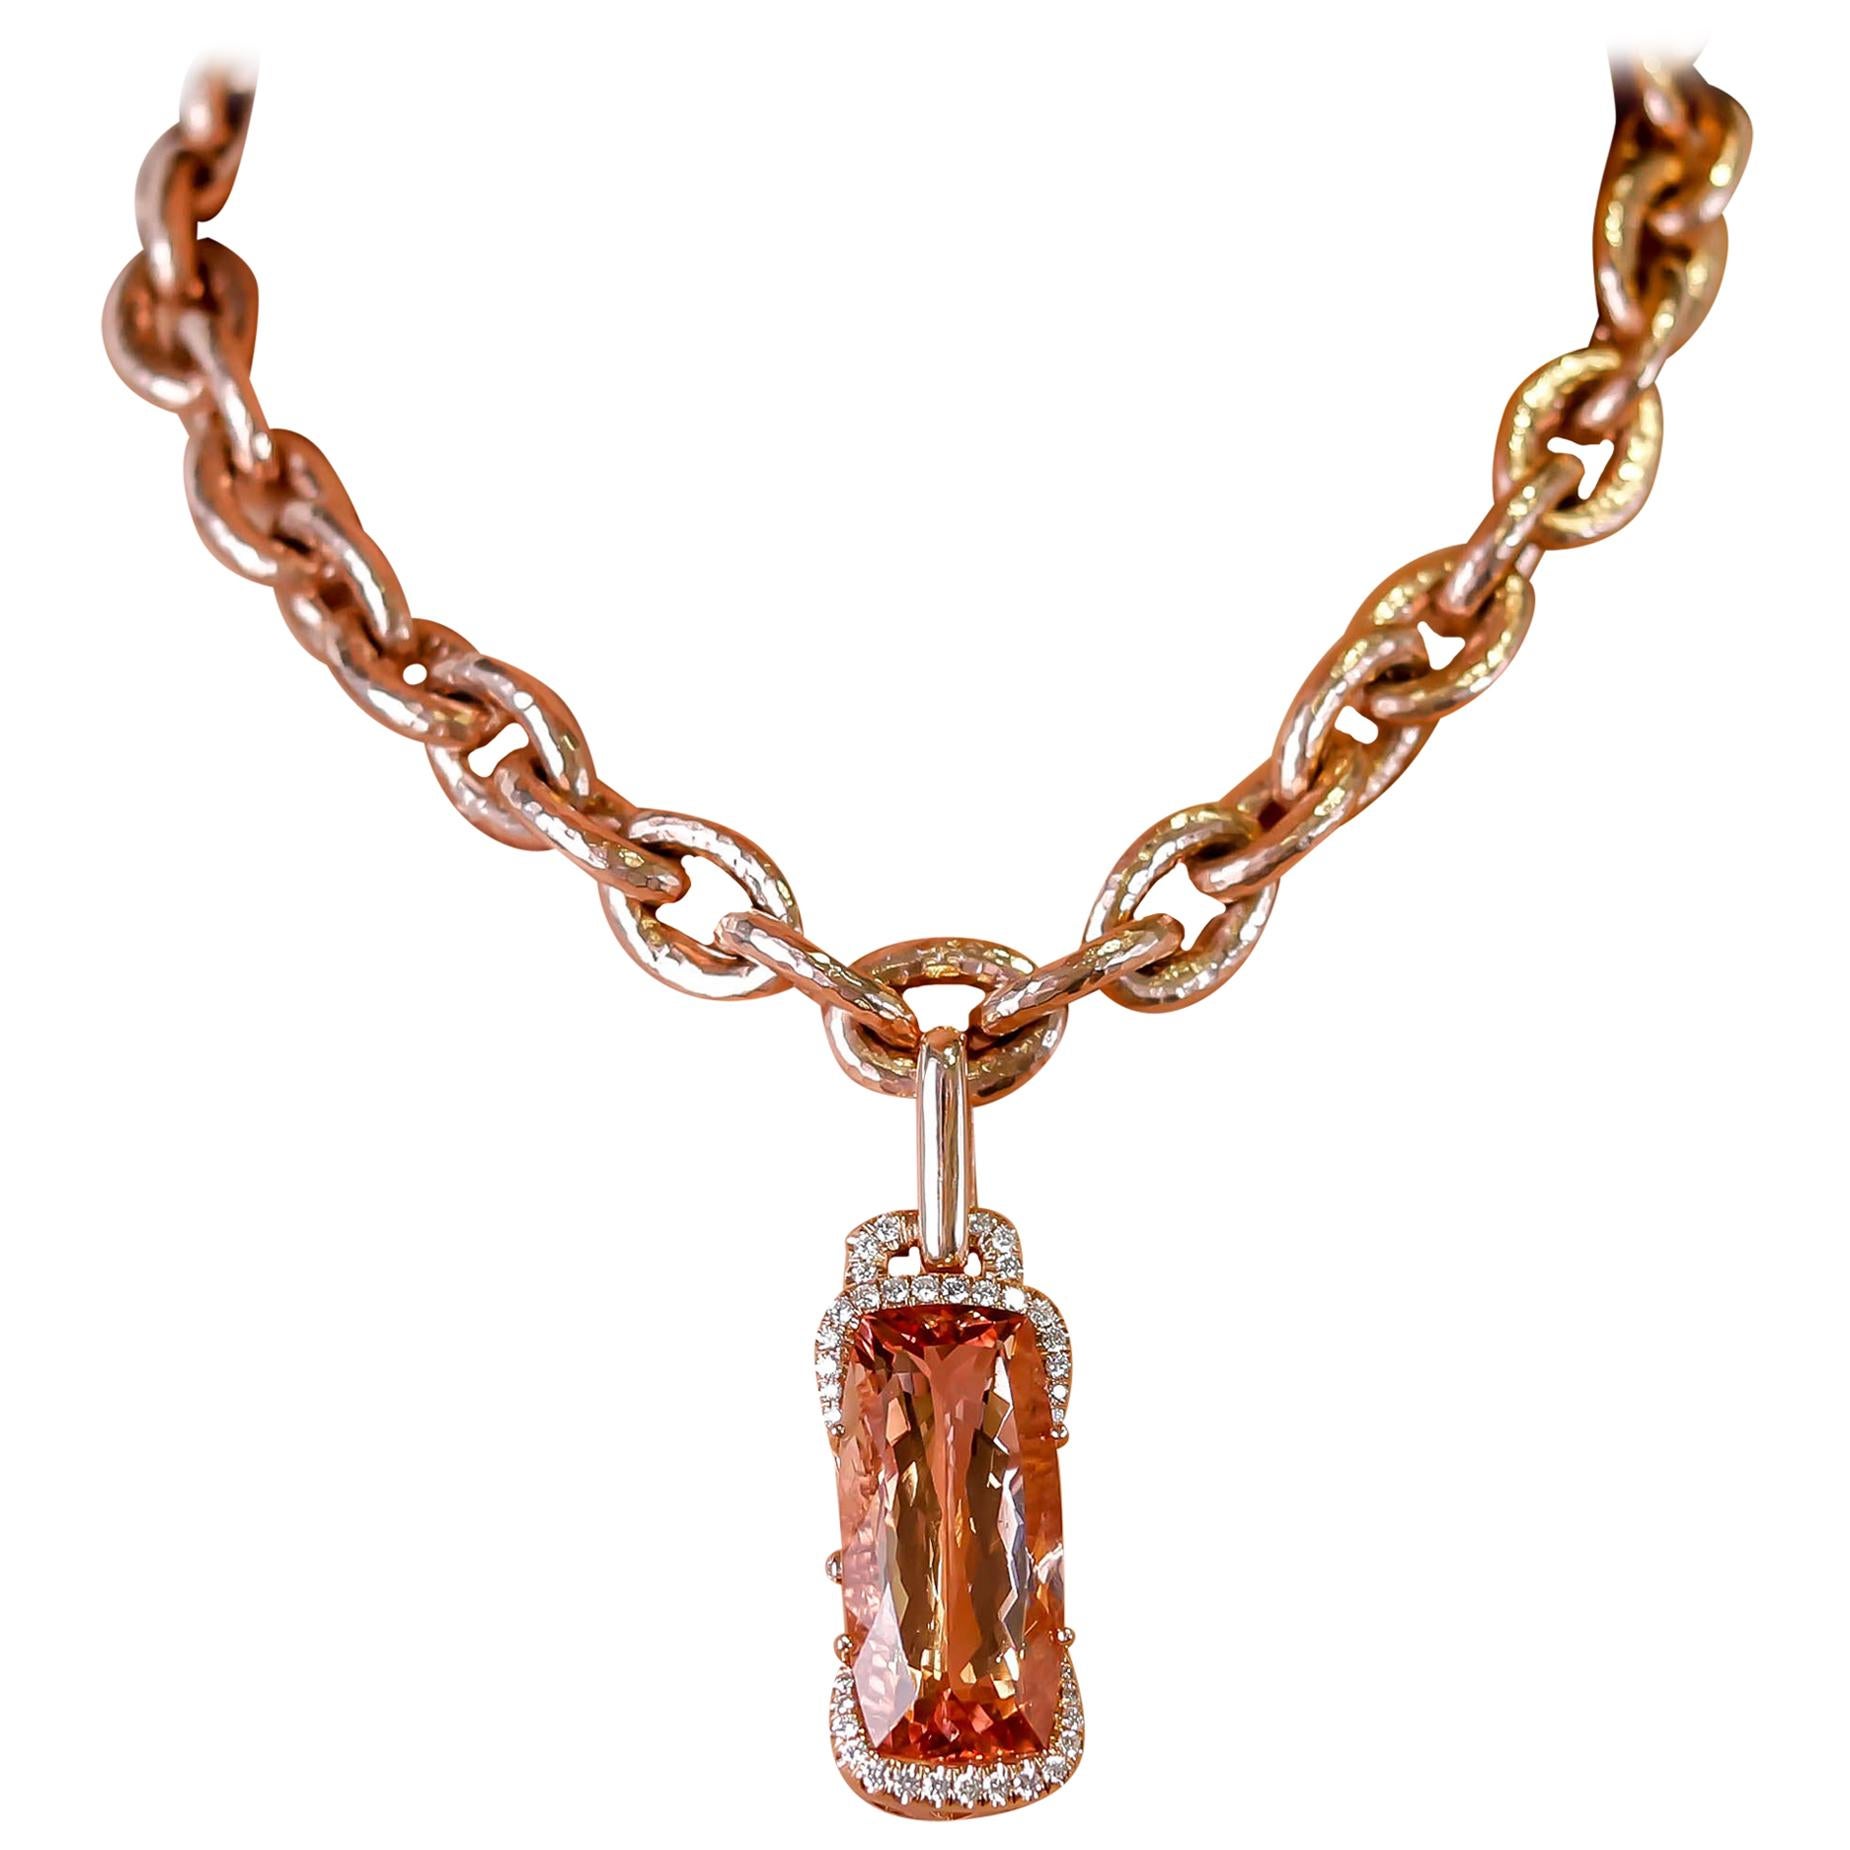 Emerald-Cut 52 Carat Morganite and Diamond 14 Karat Gold Pendant Chain Necklace For Sale